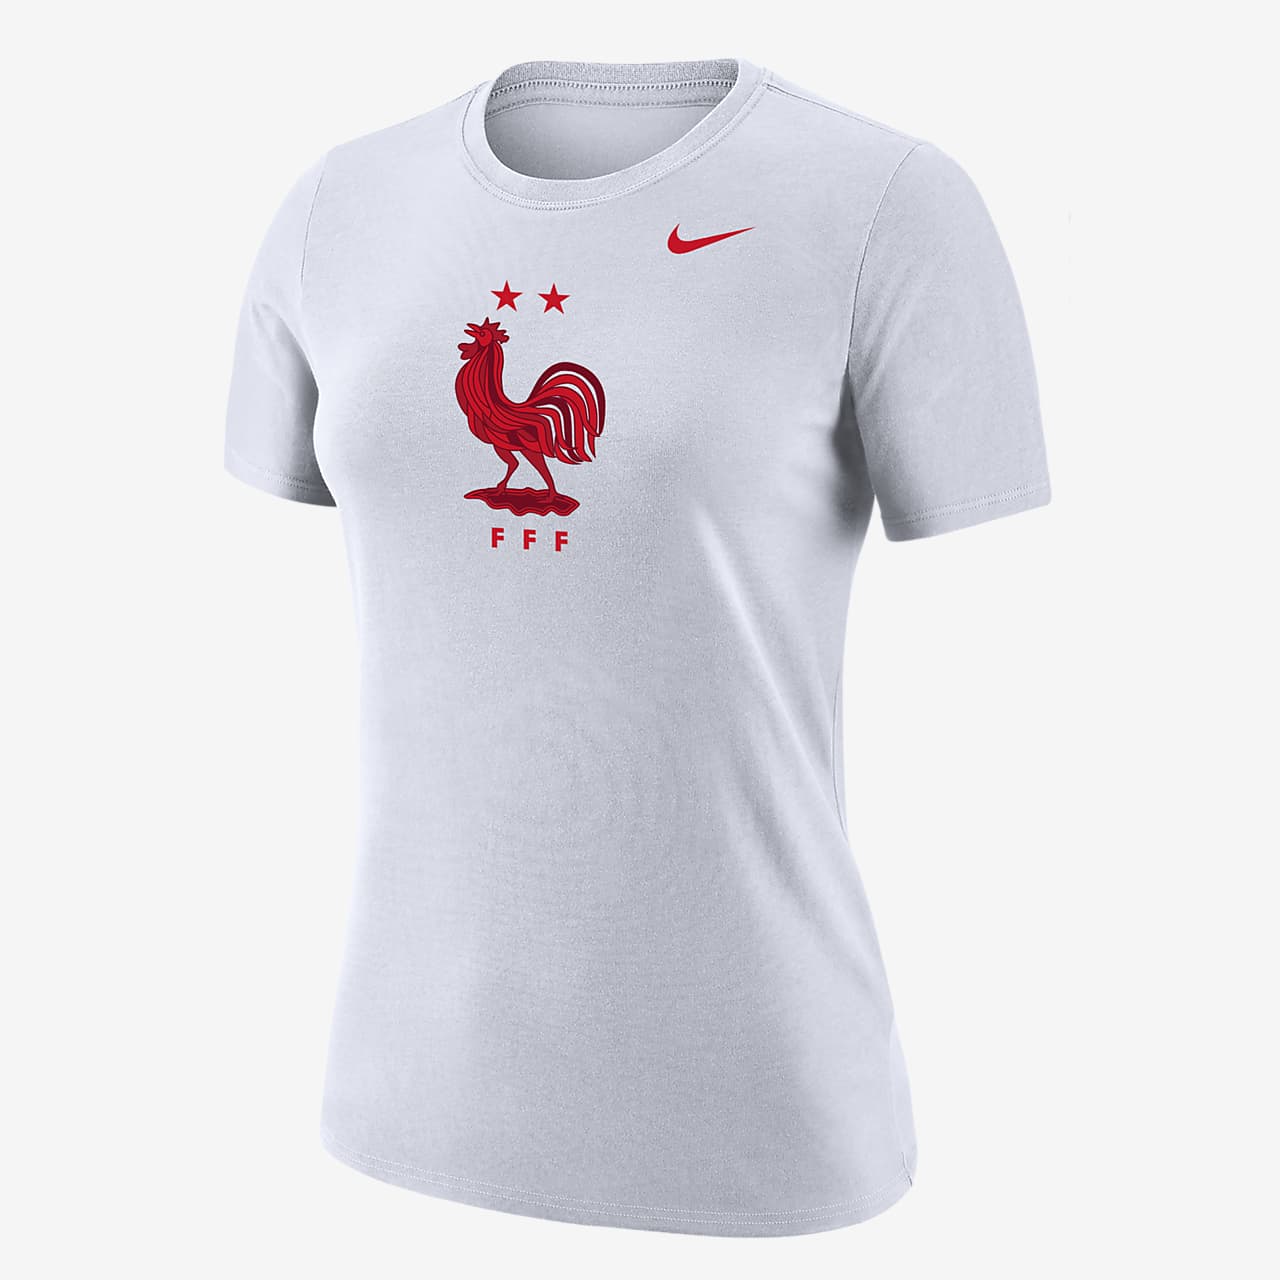 Boren Wirwar Minder dan FFF Women's Nike Core T-Shirt. Nike.com